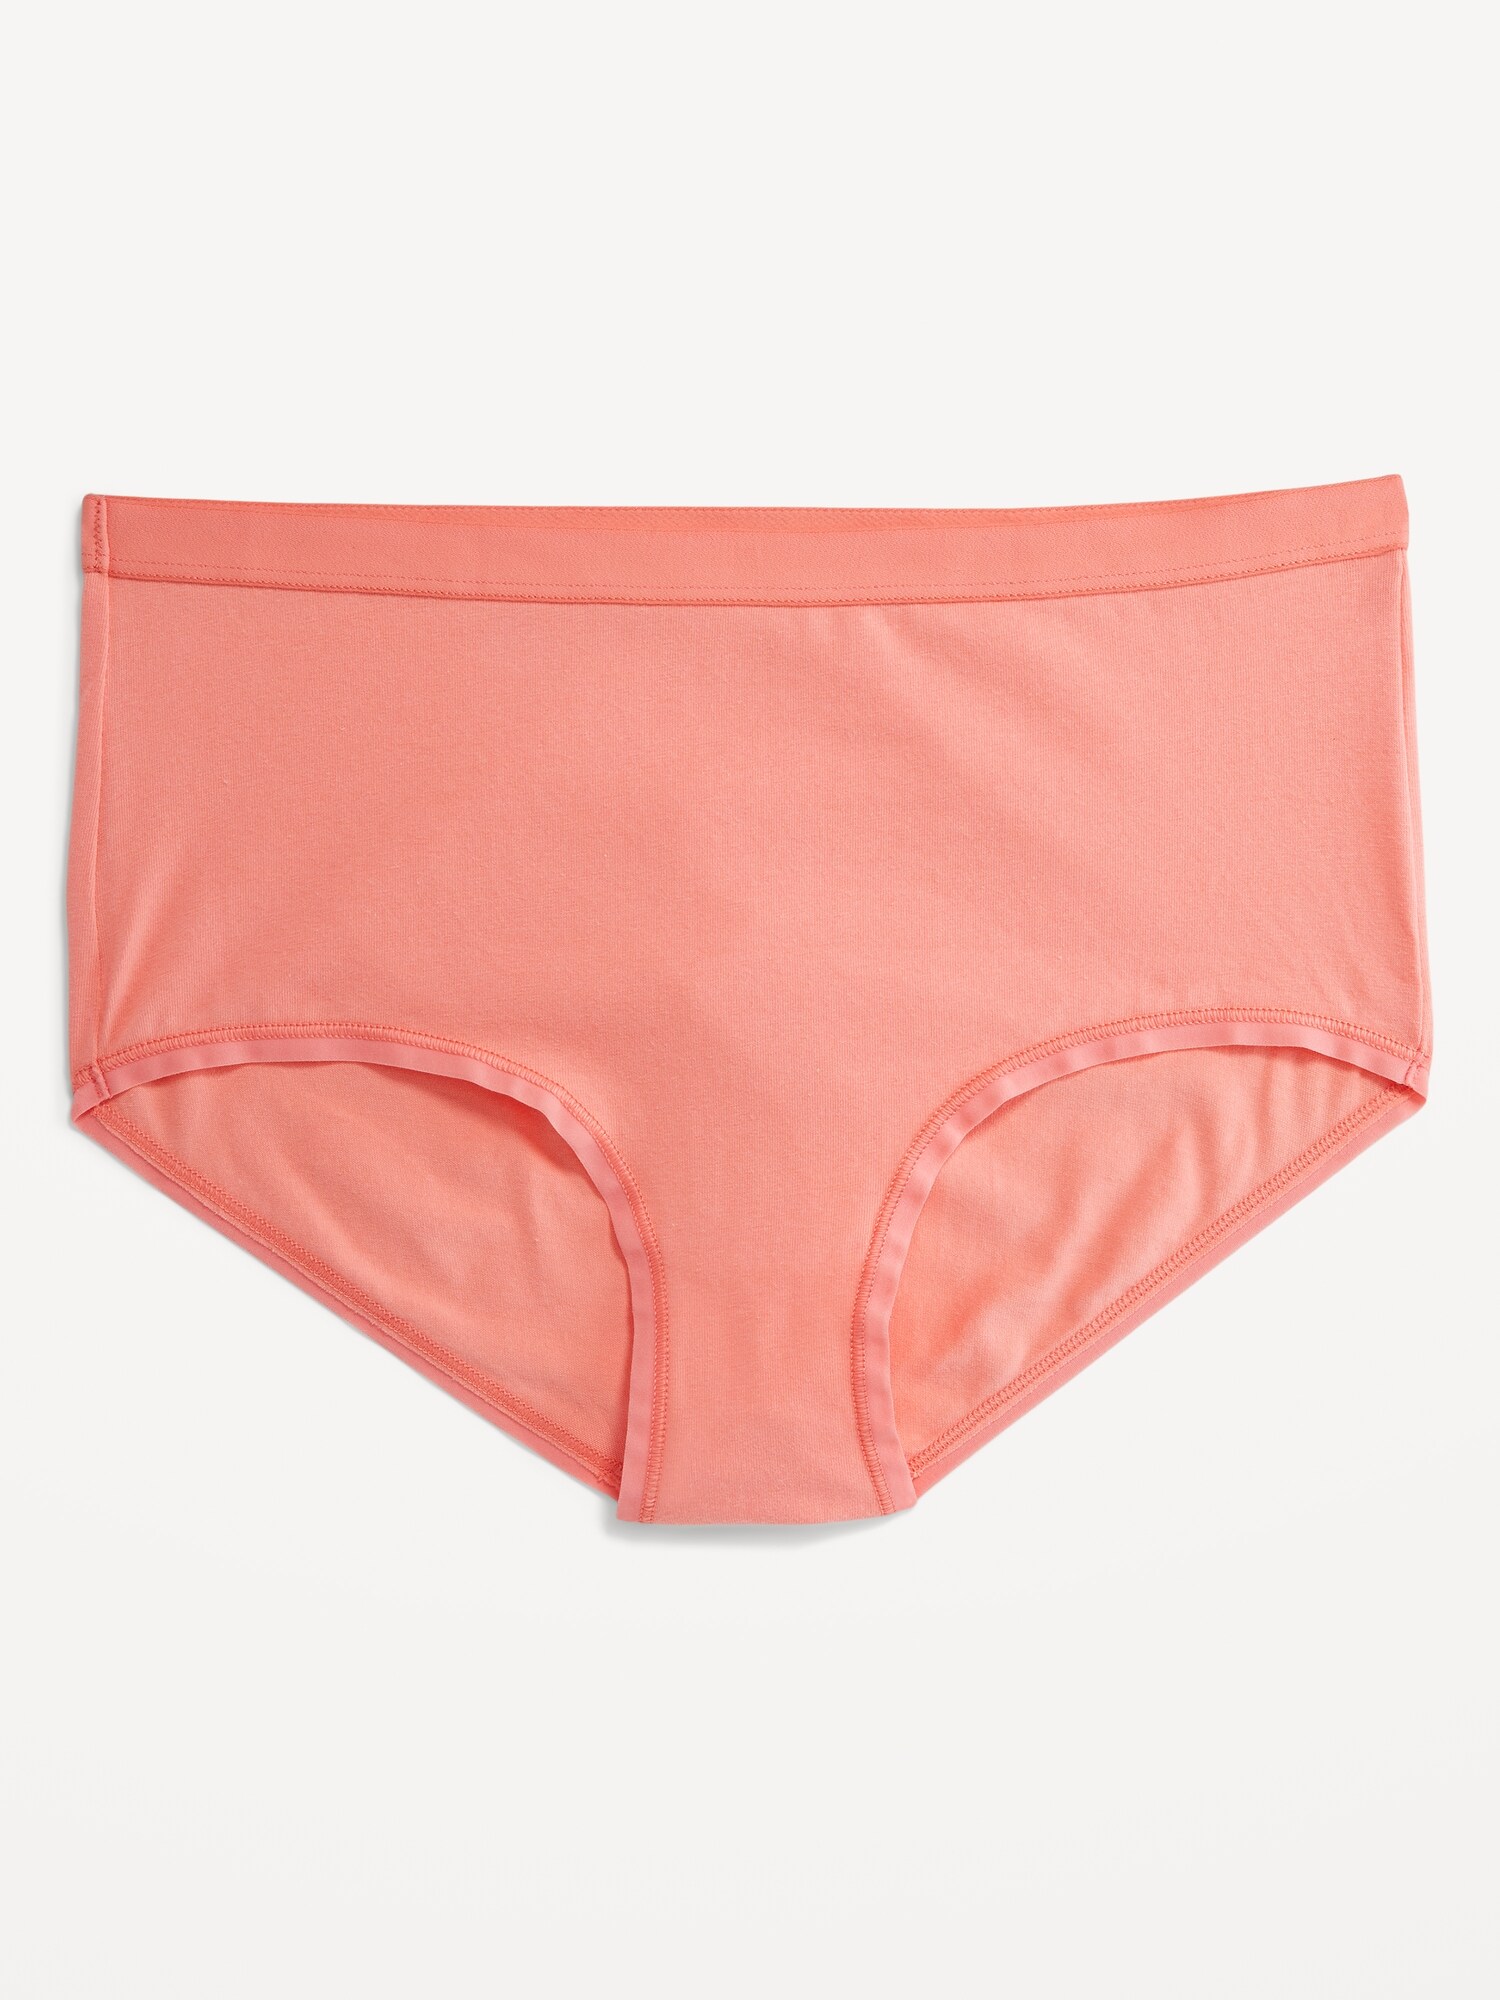 MOAB Organic Women's Cotton Bikini Panty - M63121